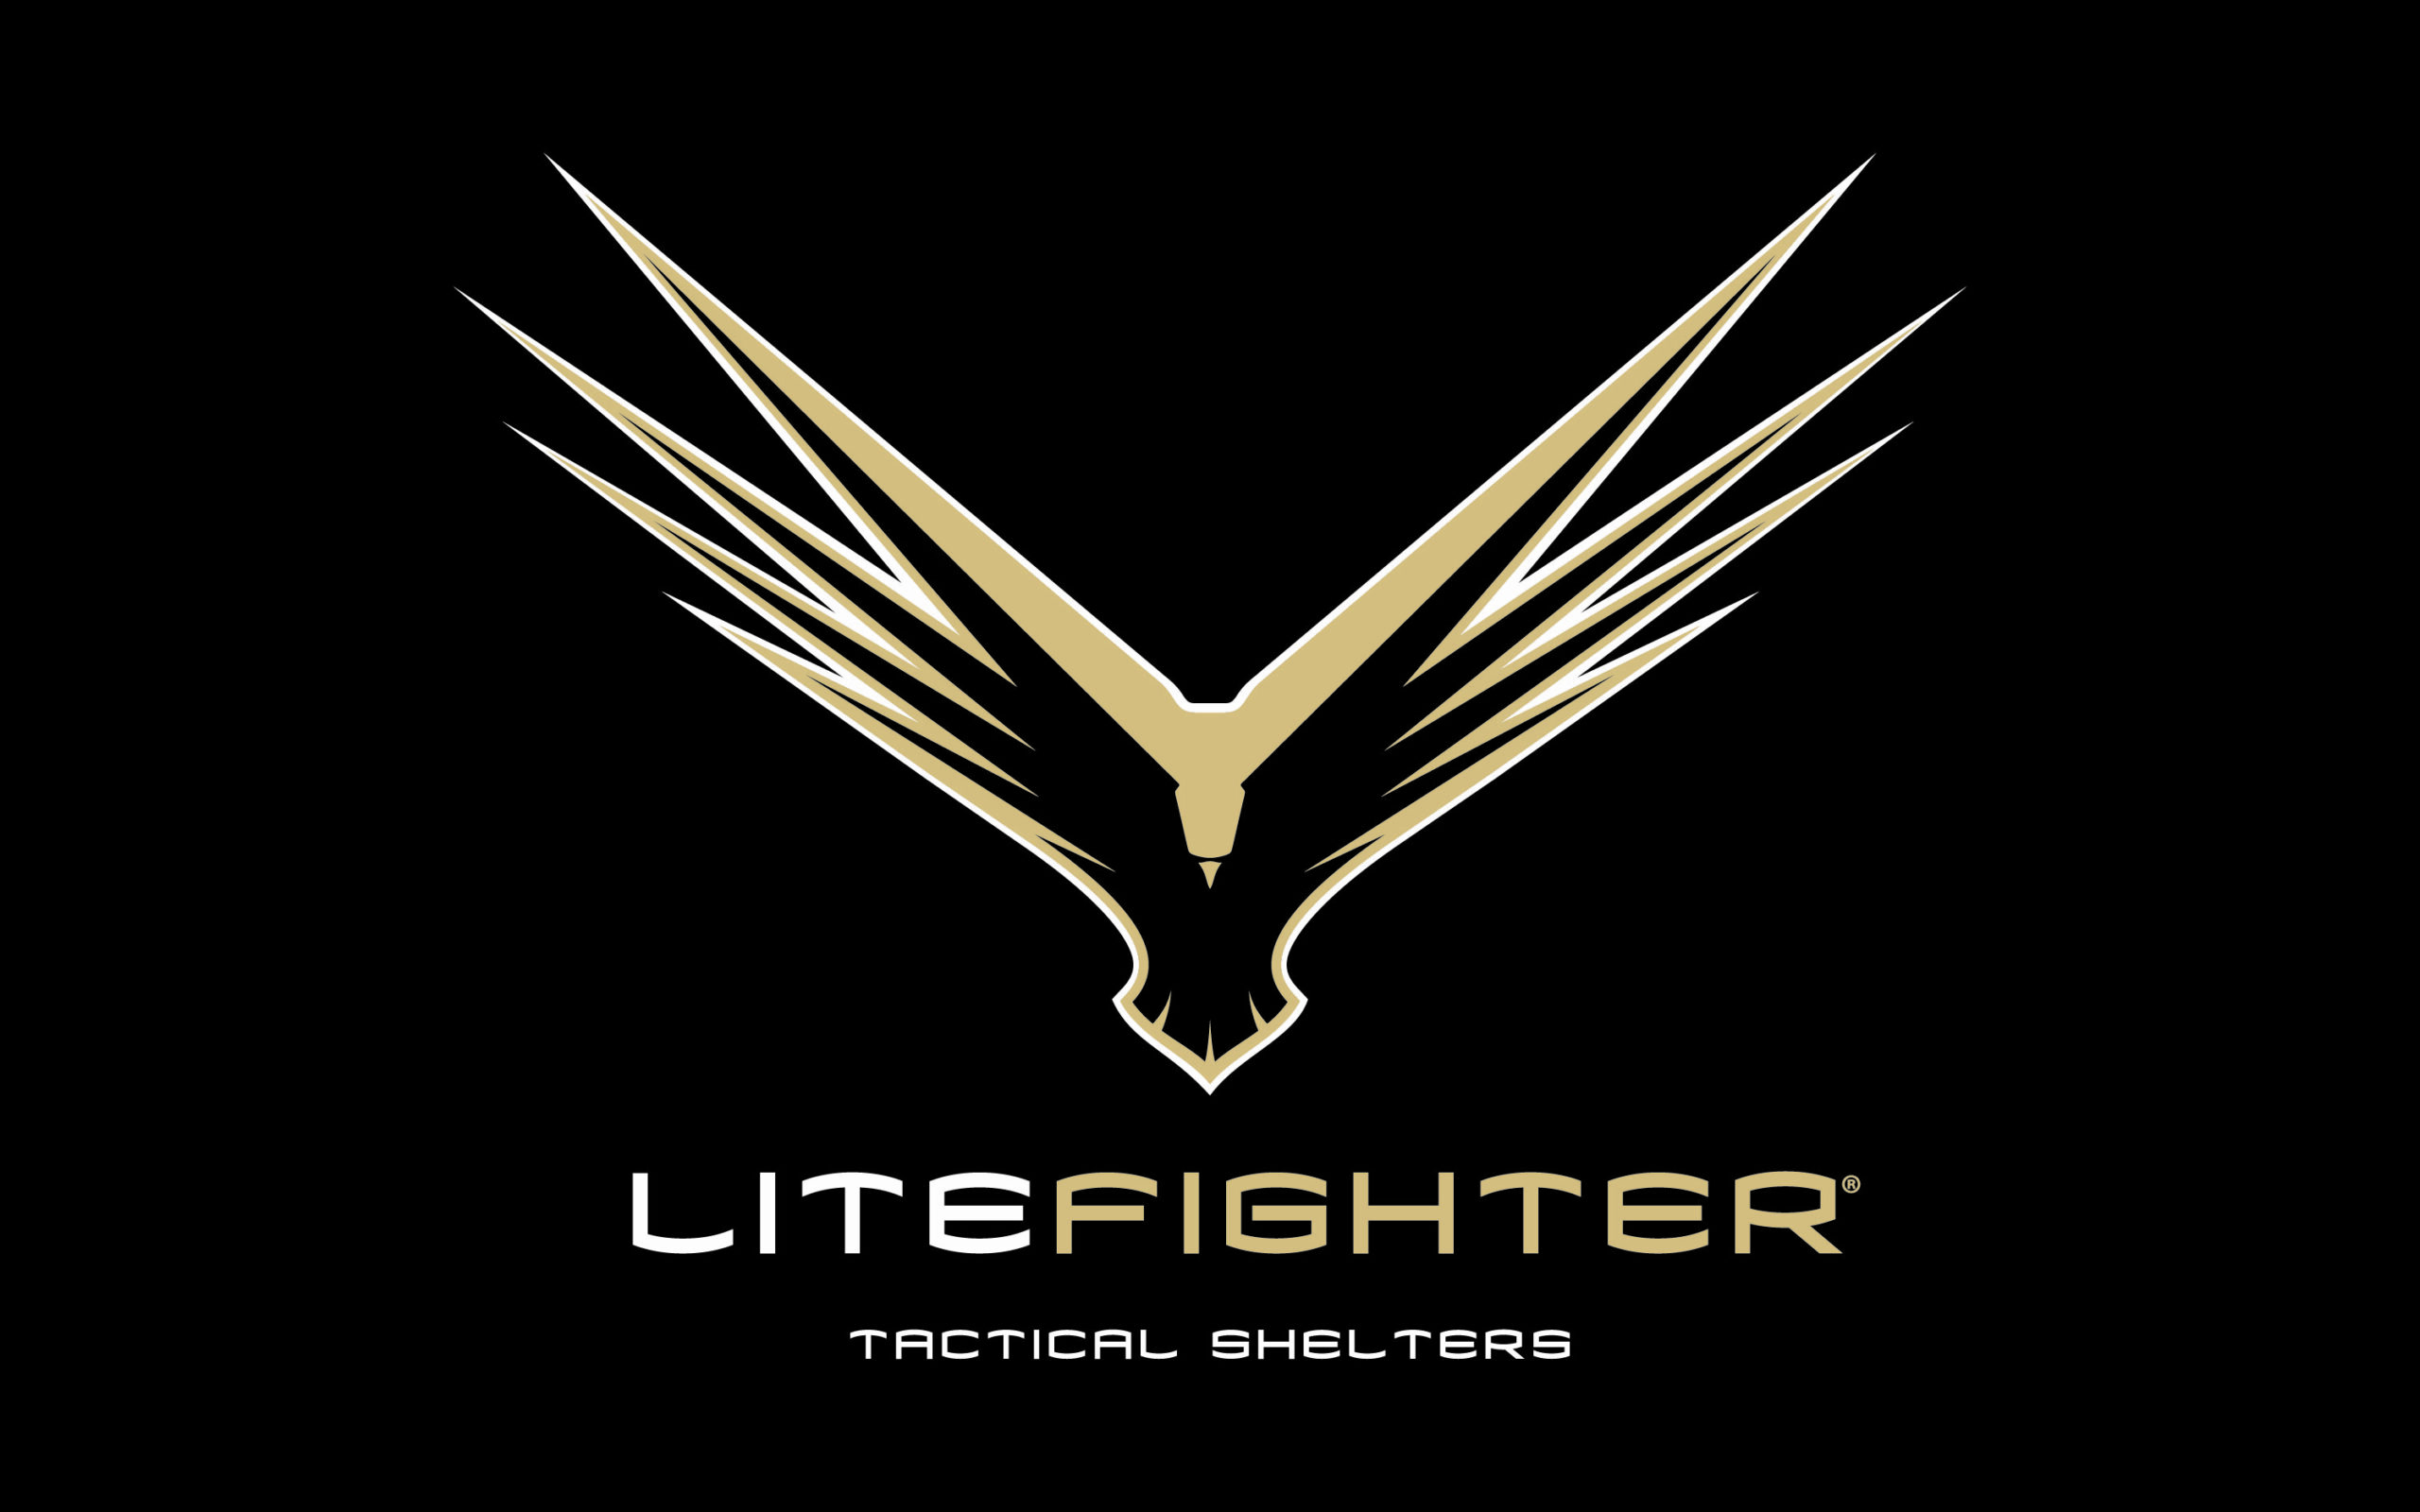 LiteFighter logo